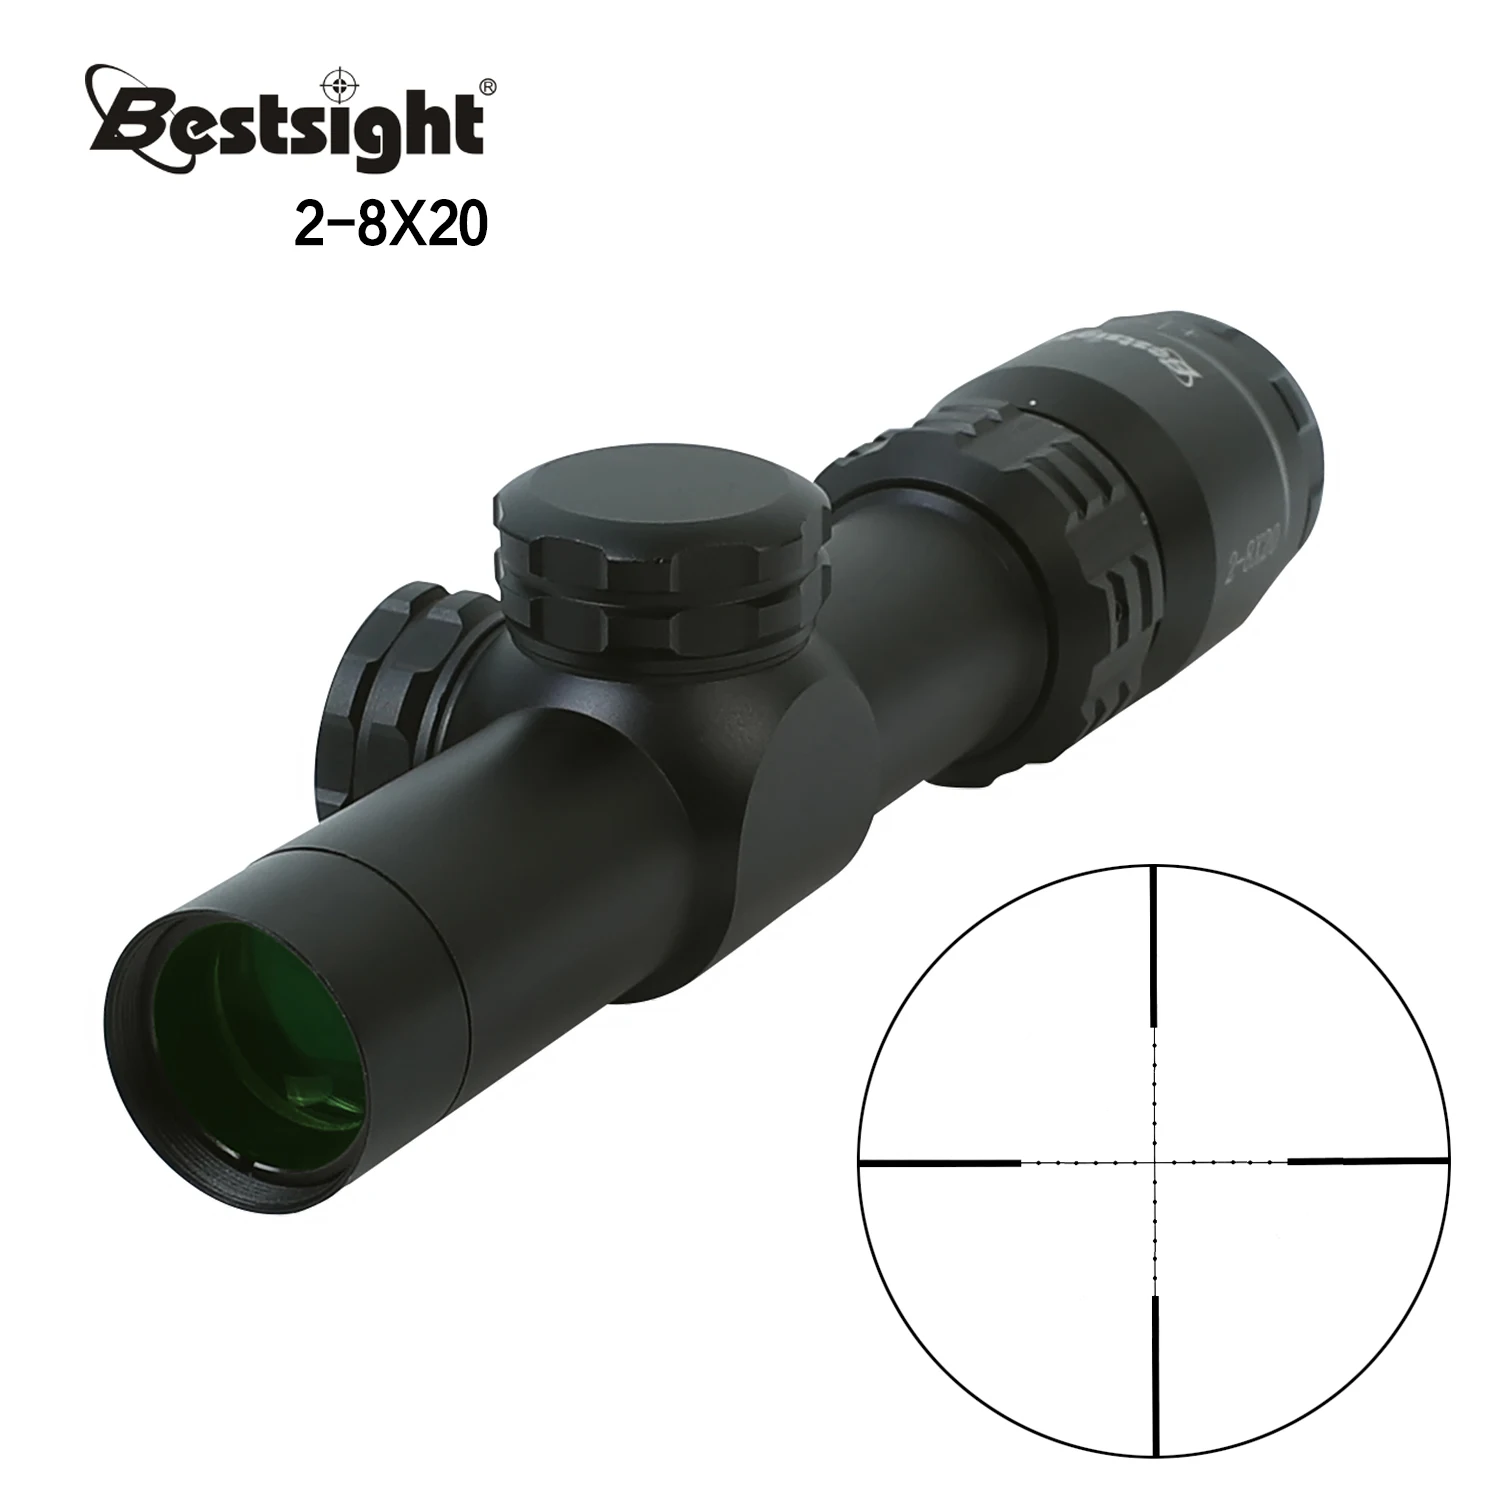 2-8x20 Tactical Riflescope Hunting scope Mil Dot Illumination Reticle Sight Rifle Scope Sniper Hunting Scopes airsoft accessori